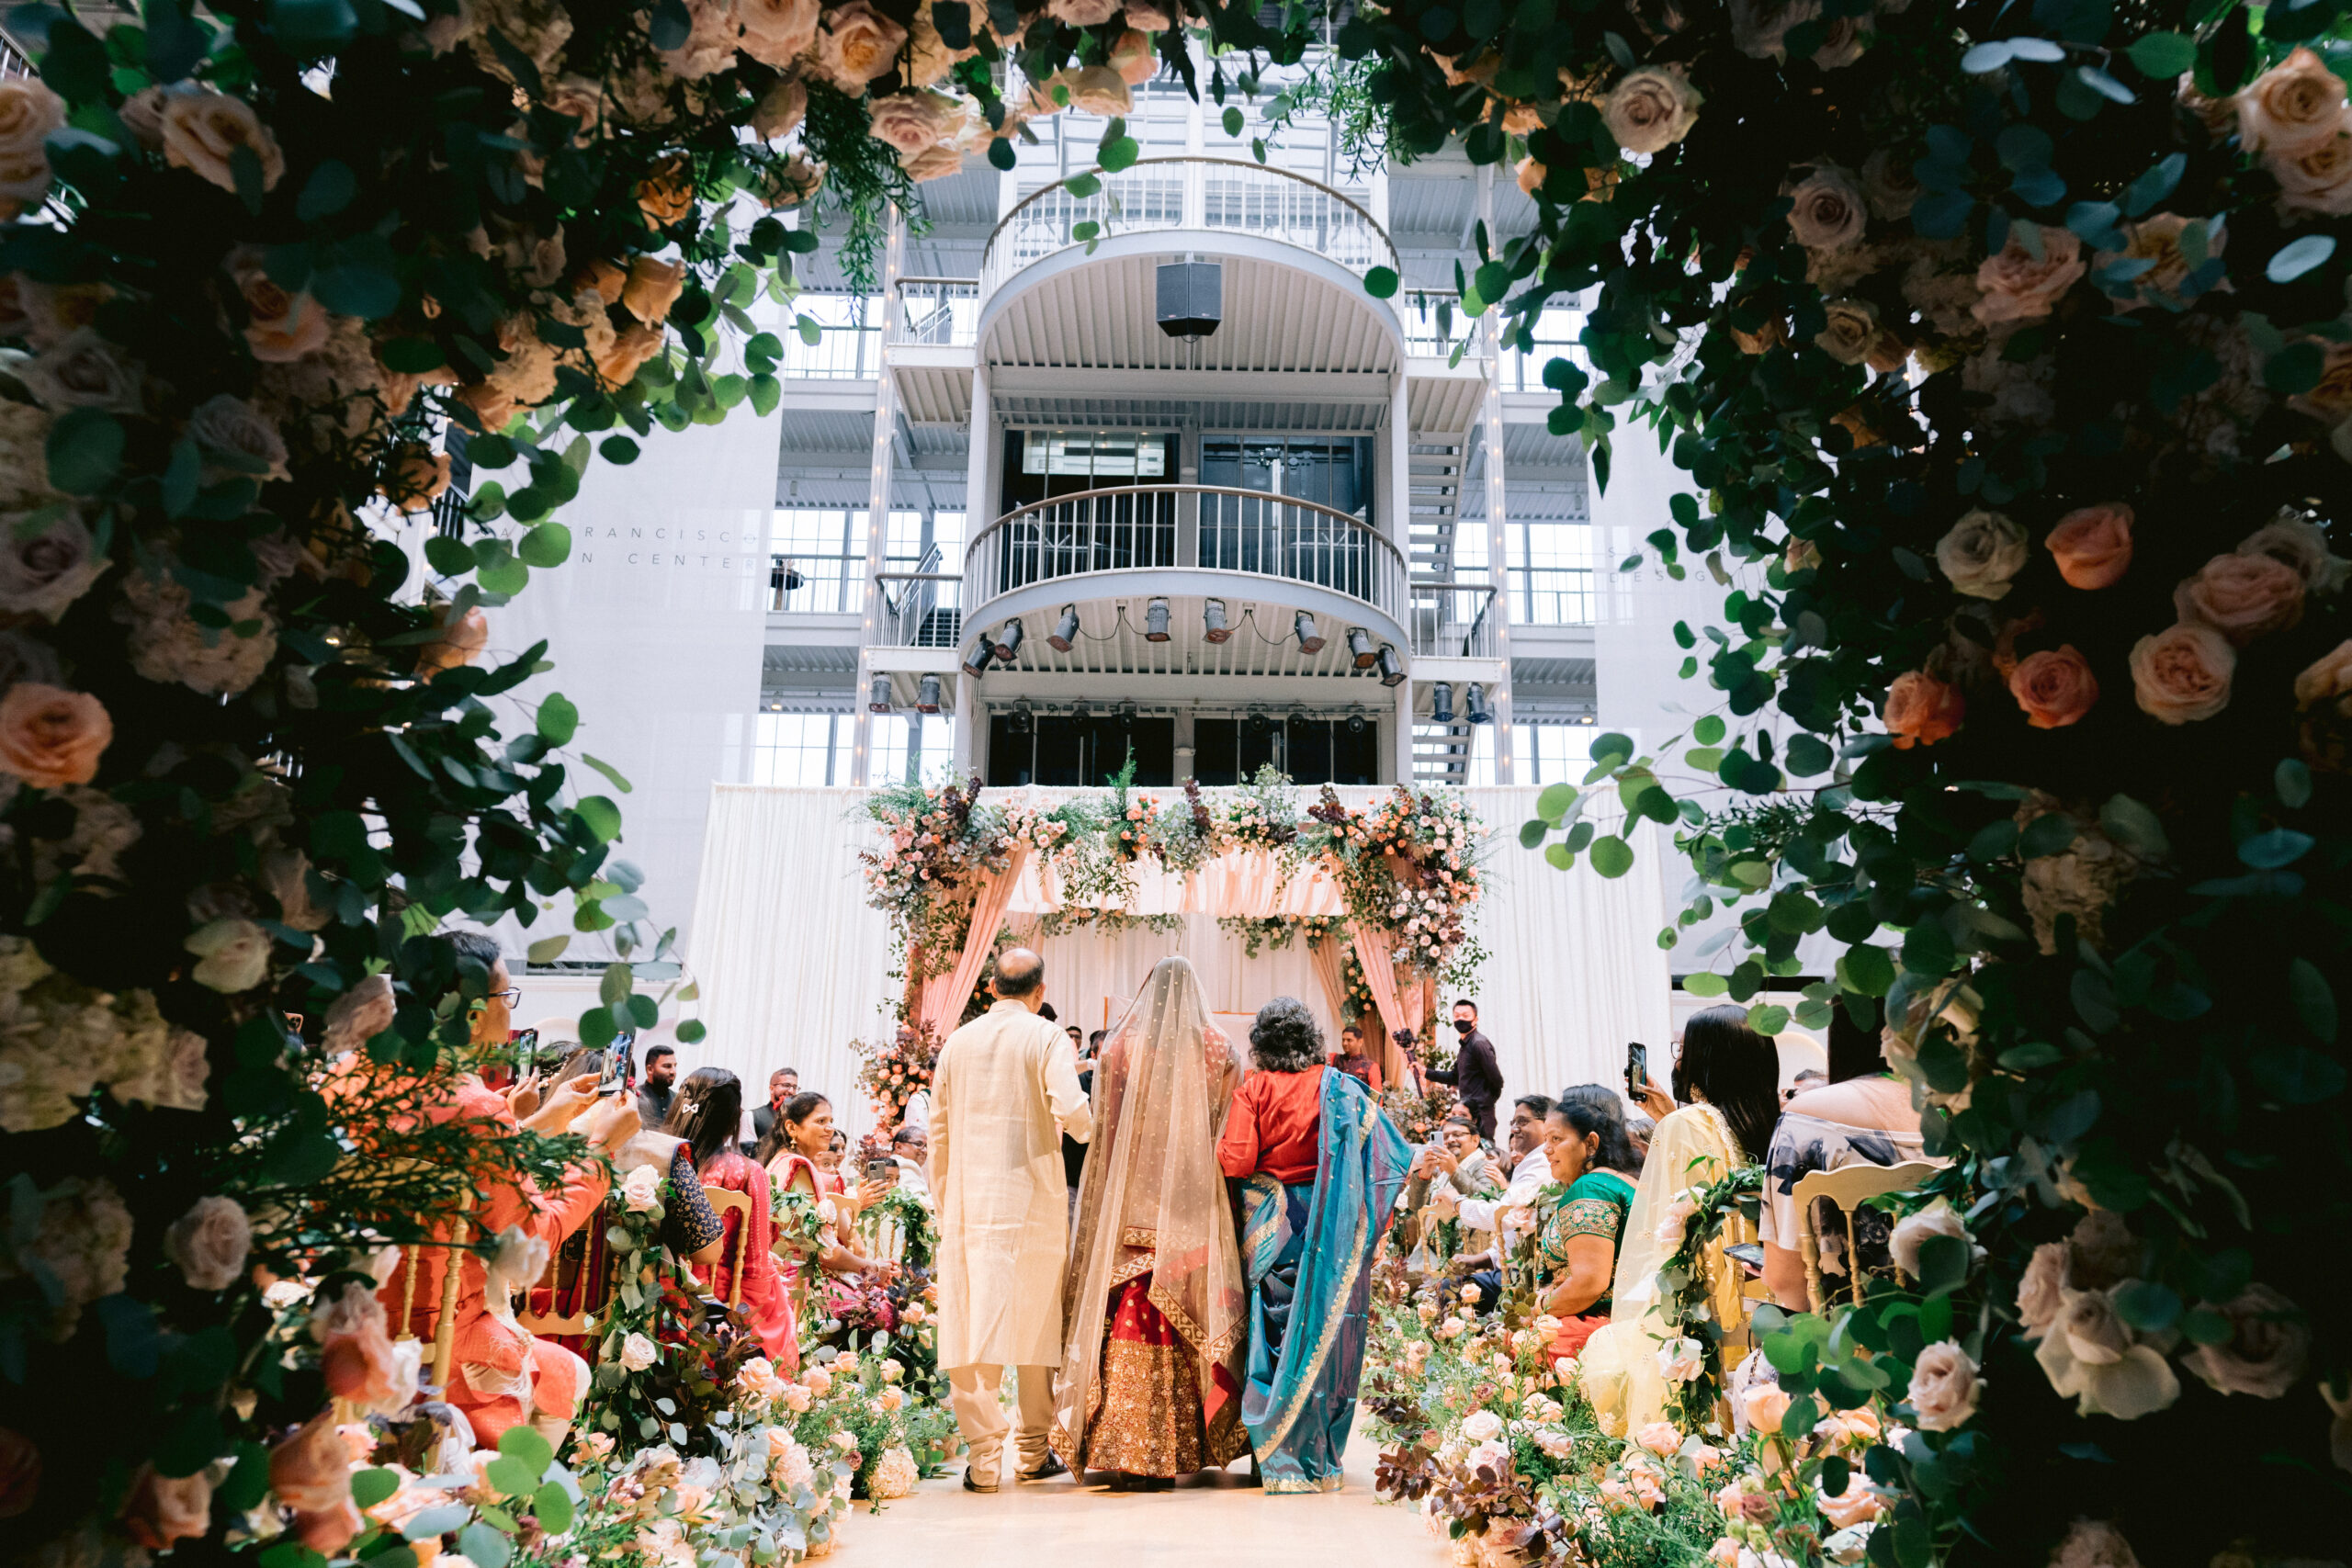 Indian wedding bridal procession at San Francisco design center galleria